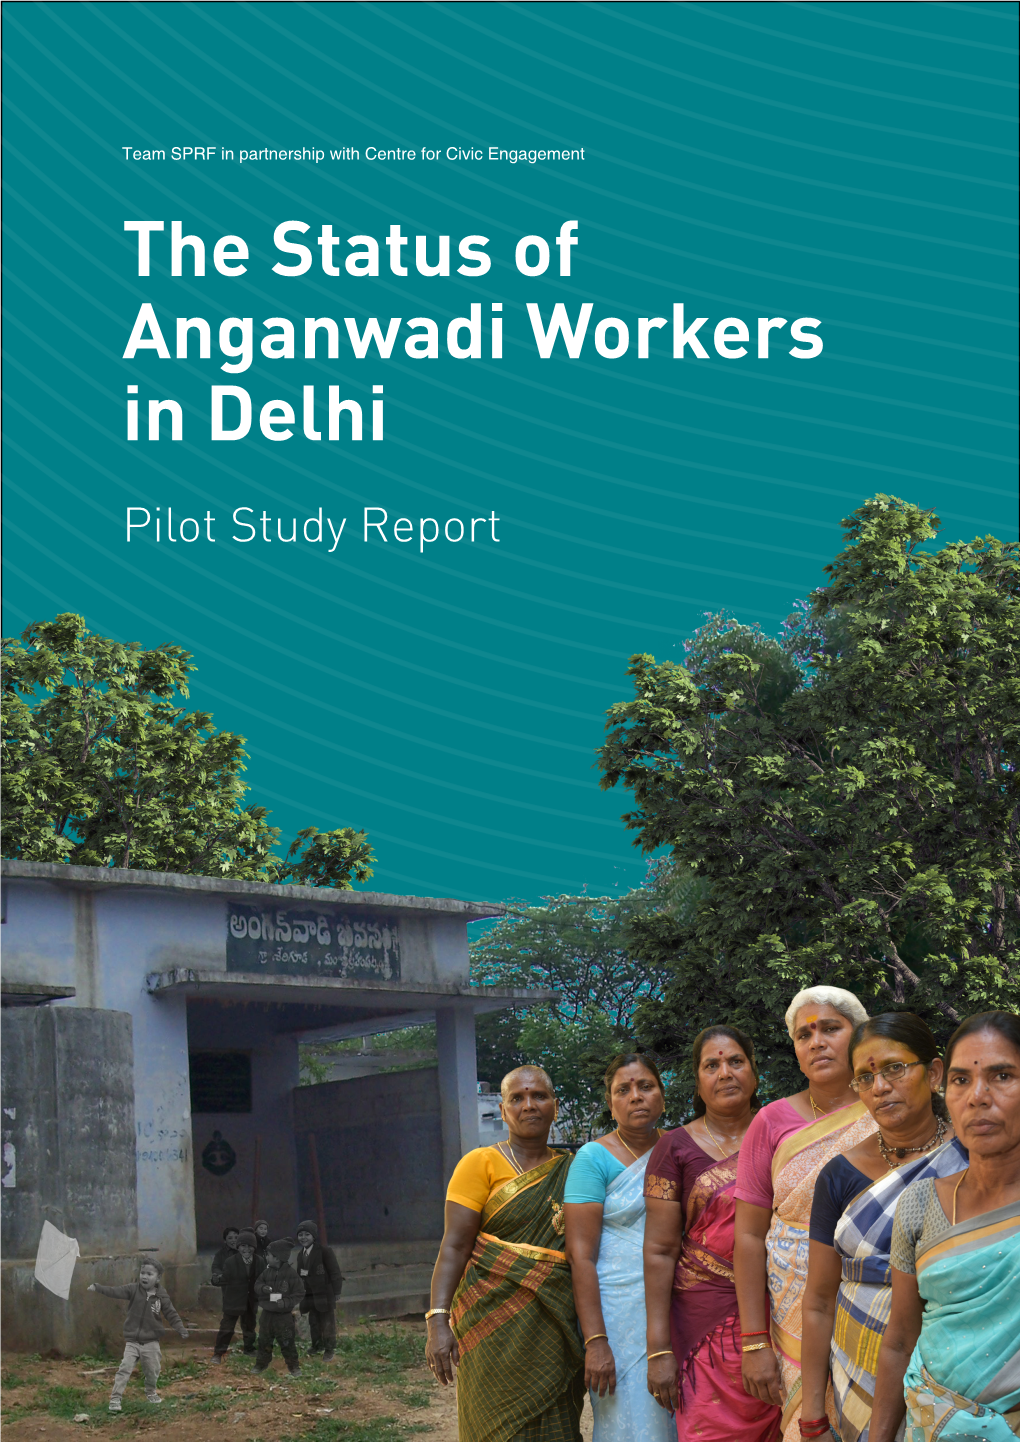 The Status of Anganwadi Workers in Delhi